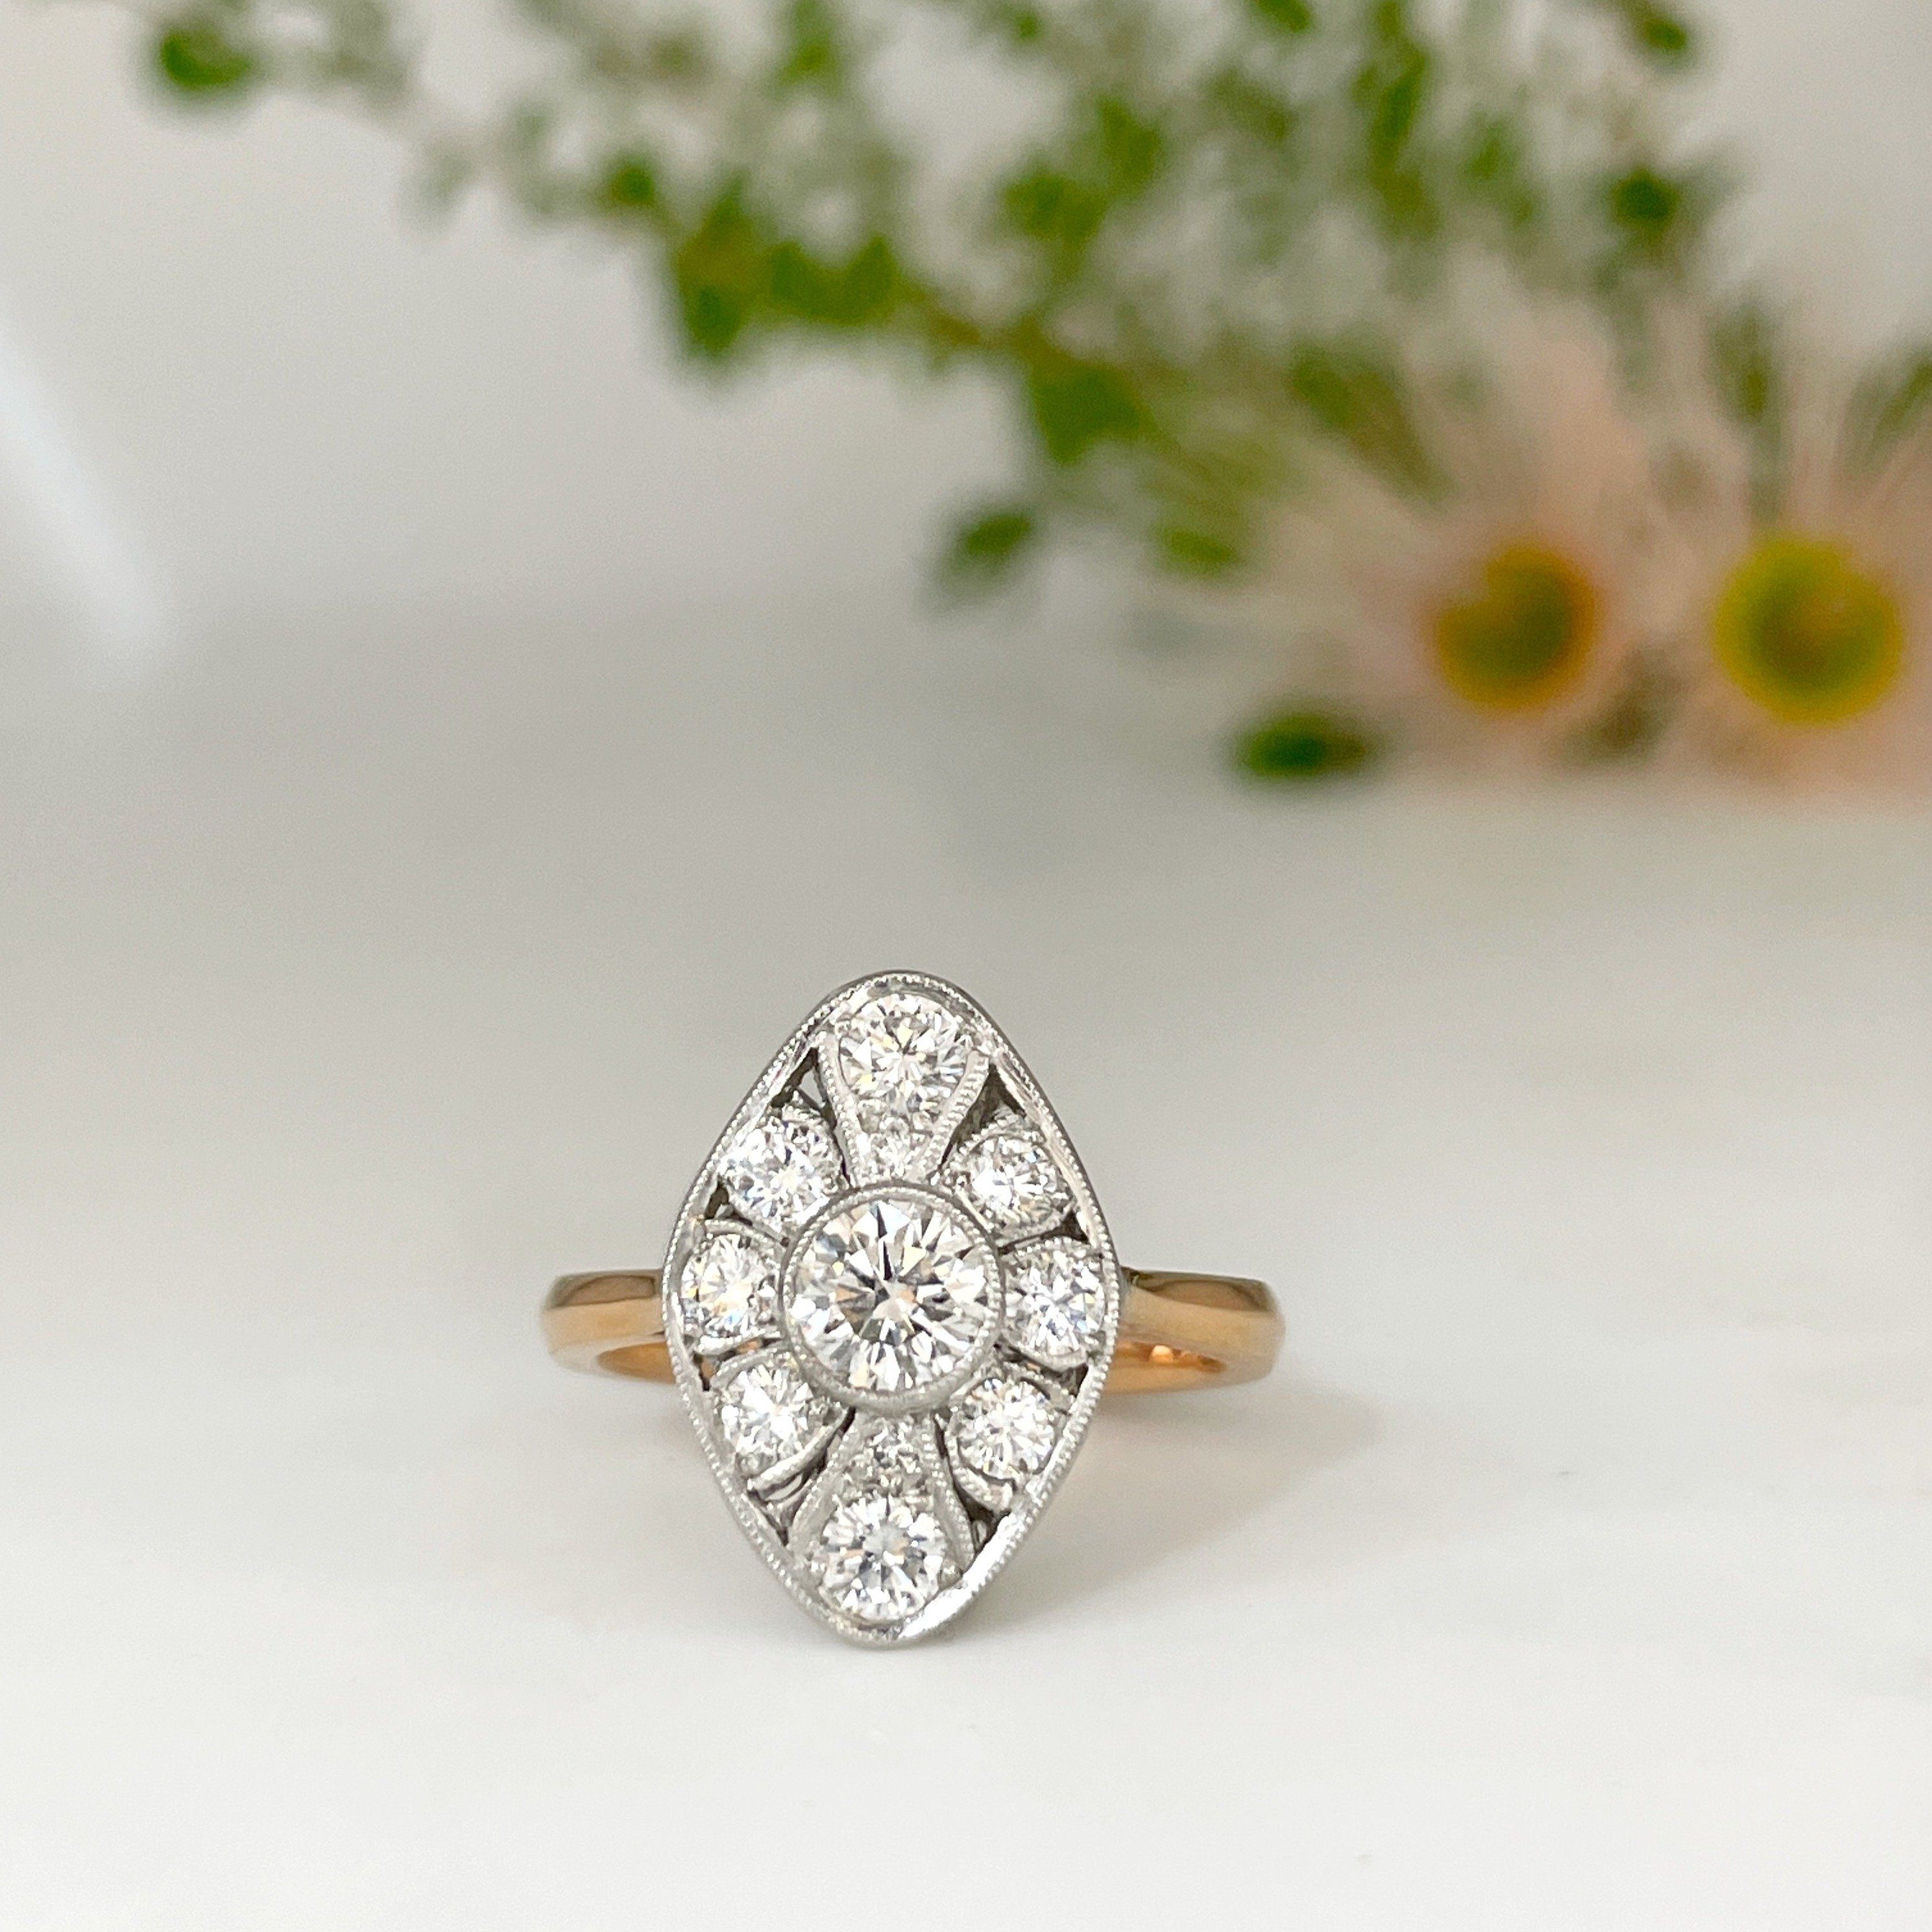 Art Deco Toi et Moi diamond engagement ring from the 1920's.